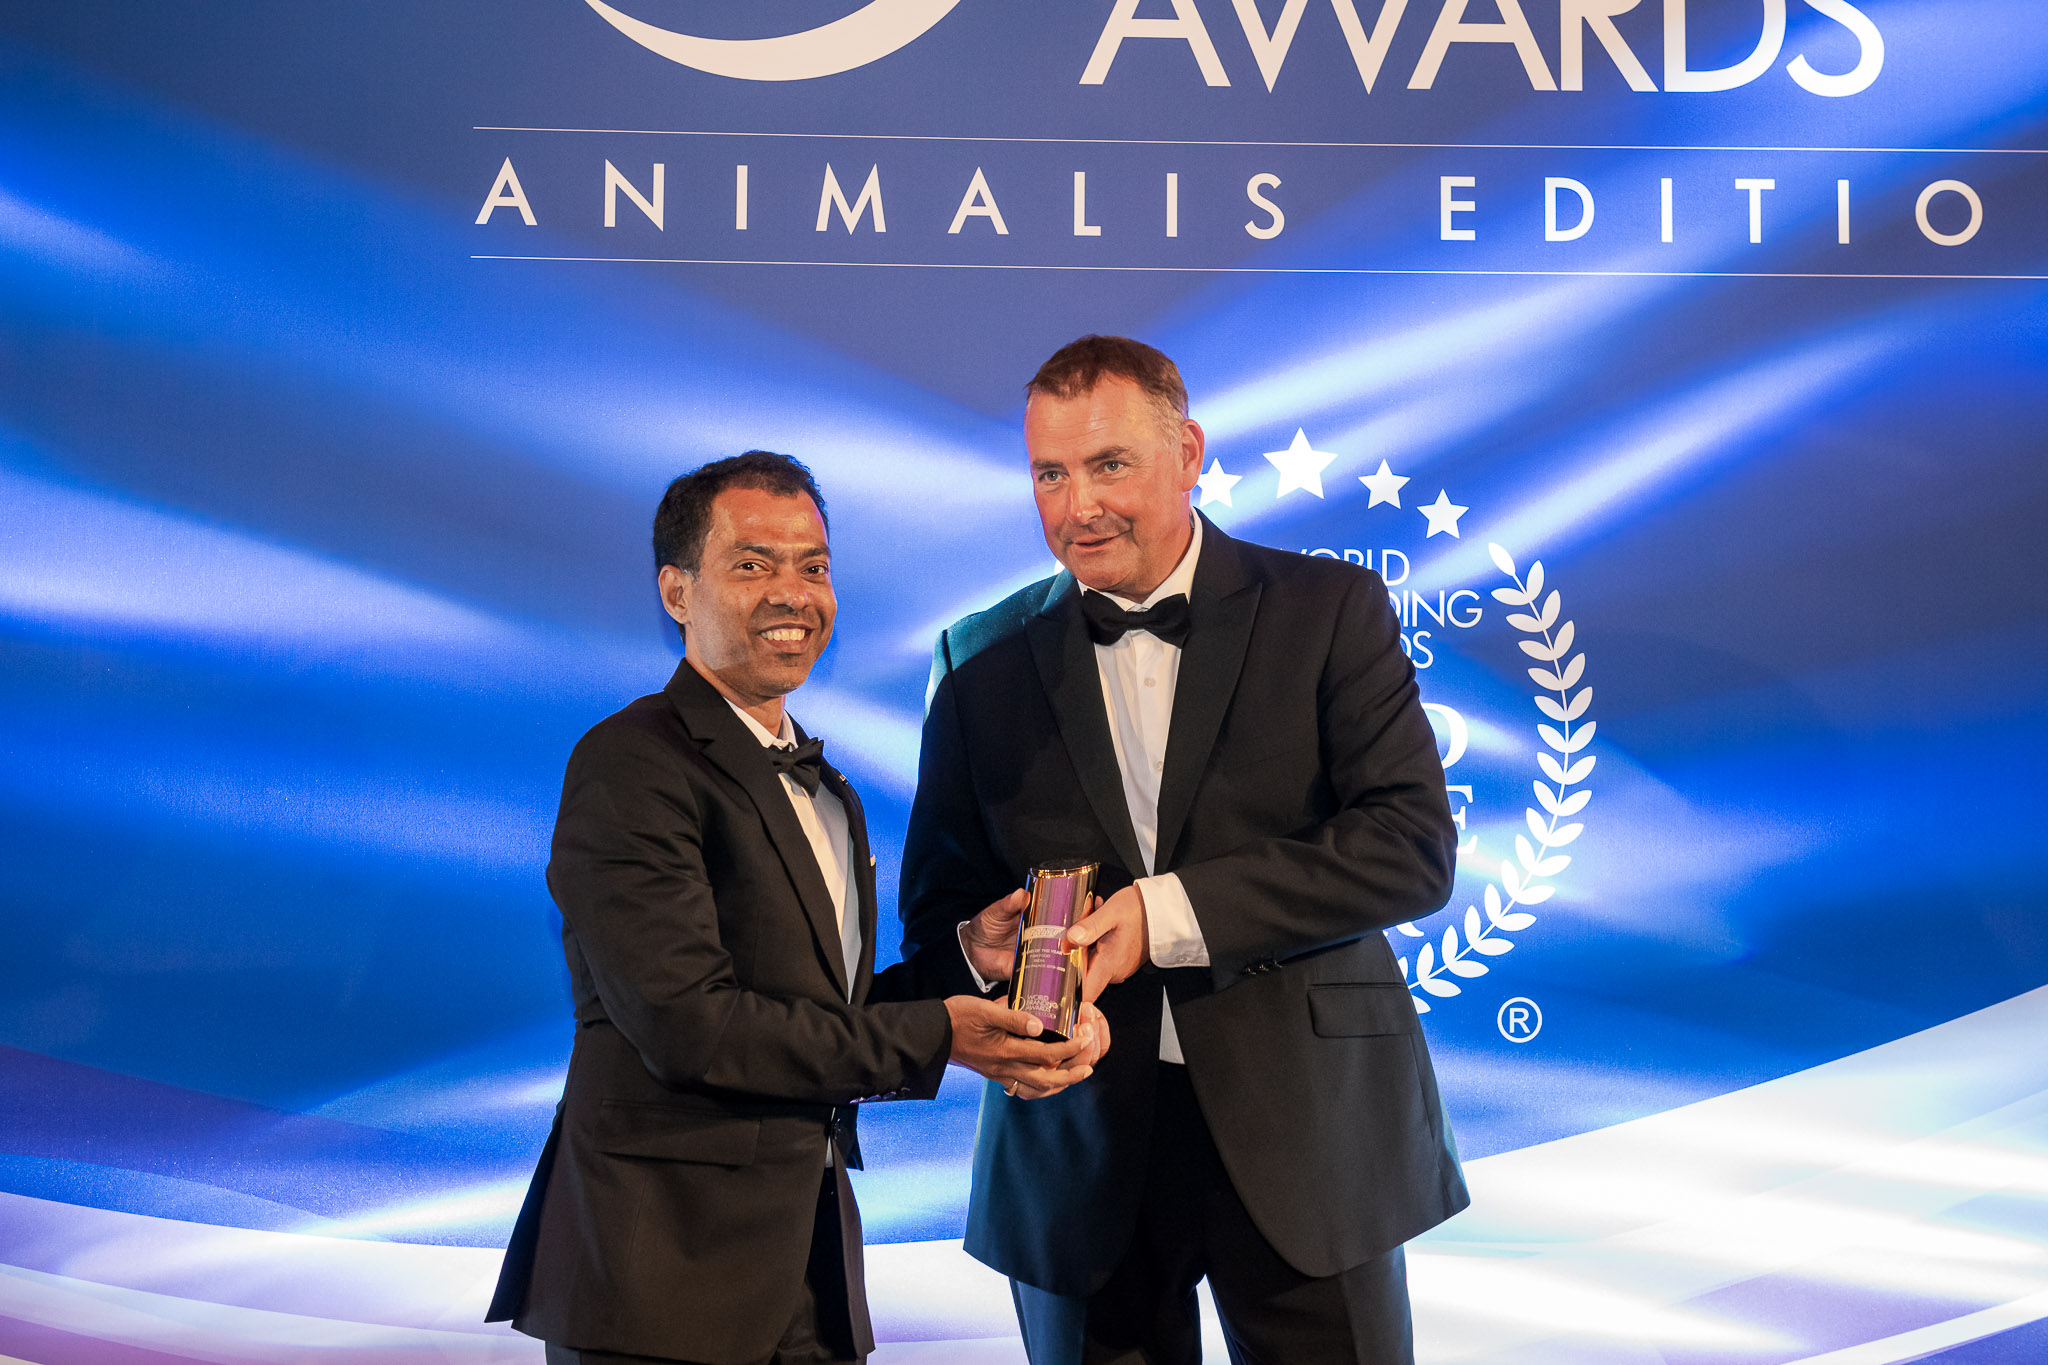 20190703_223418_world_branding_awards_animalis_7891